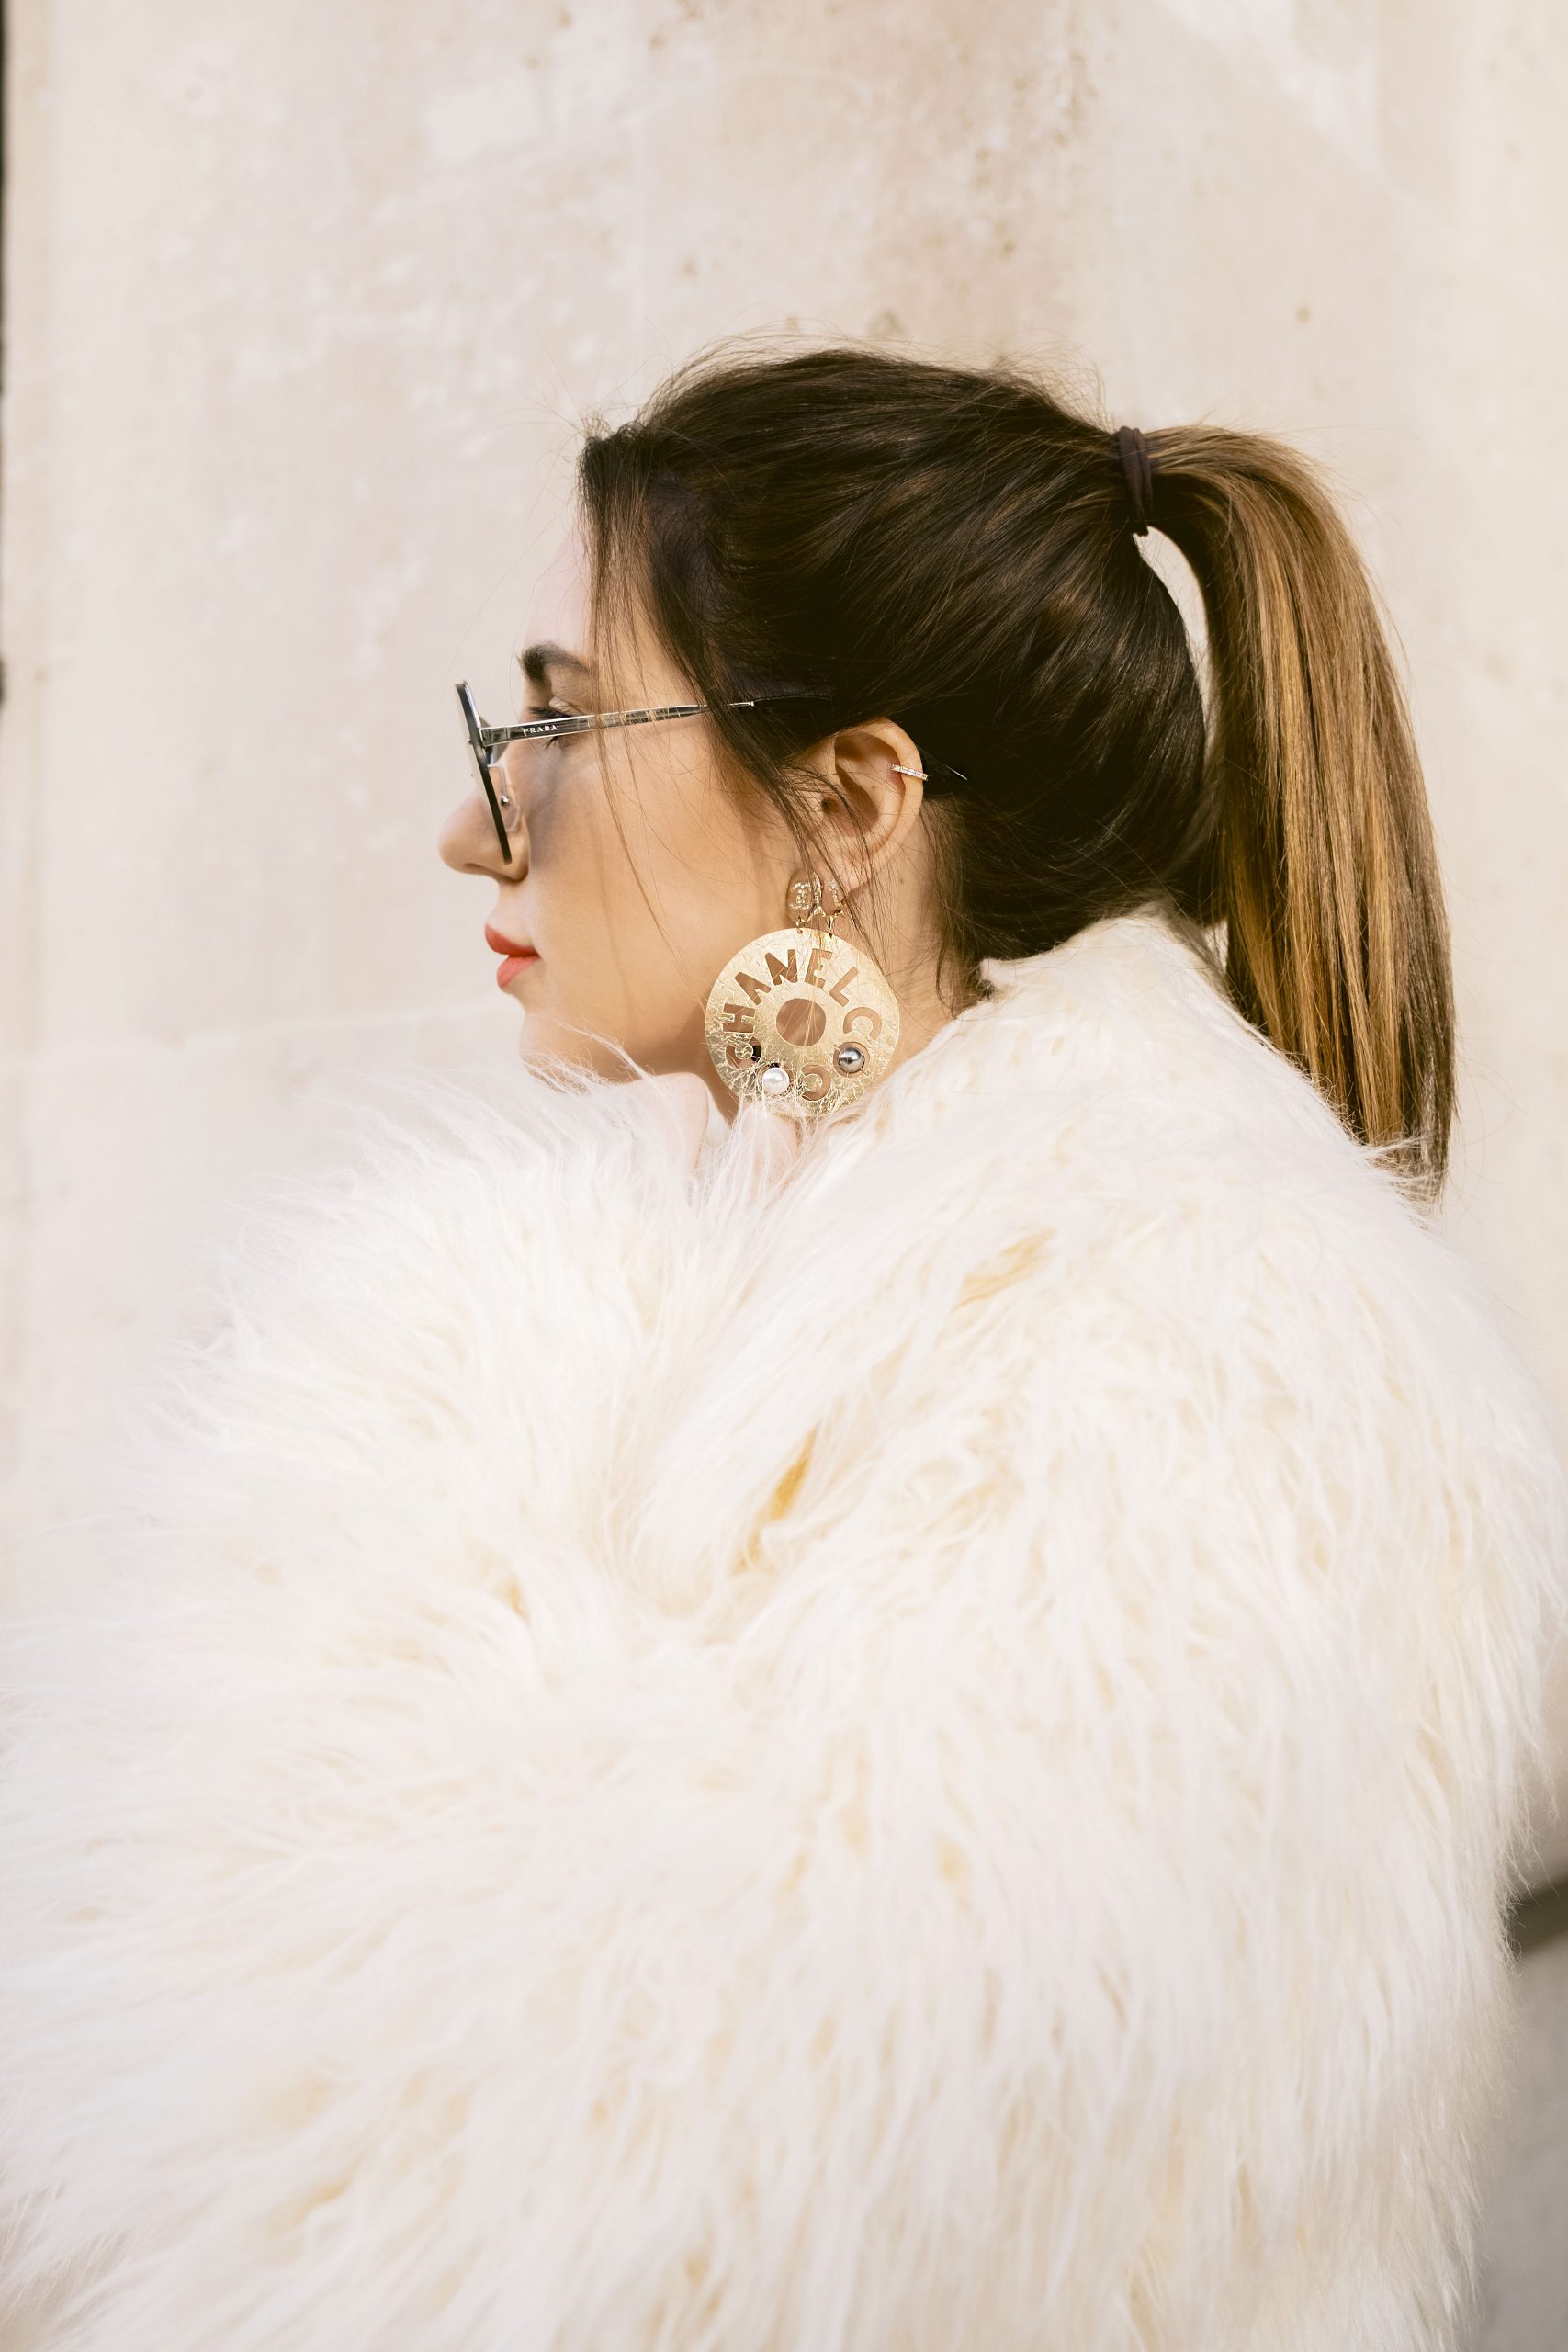 7 More Minutes. Fashion Blog. Alyona Gasimova. Paco Rabanne. Prada. Chanel earrings. Red lipstick. Spring-Summer 2020.